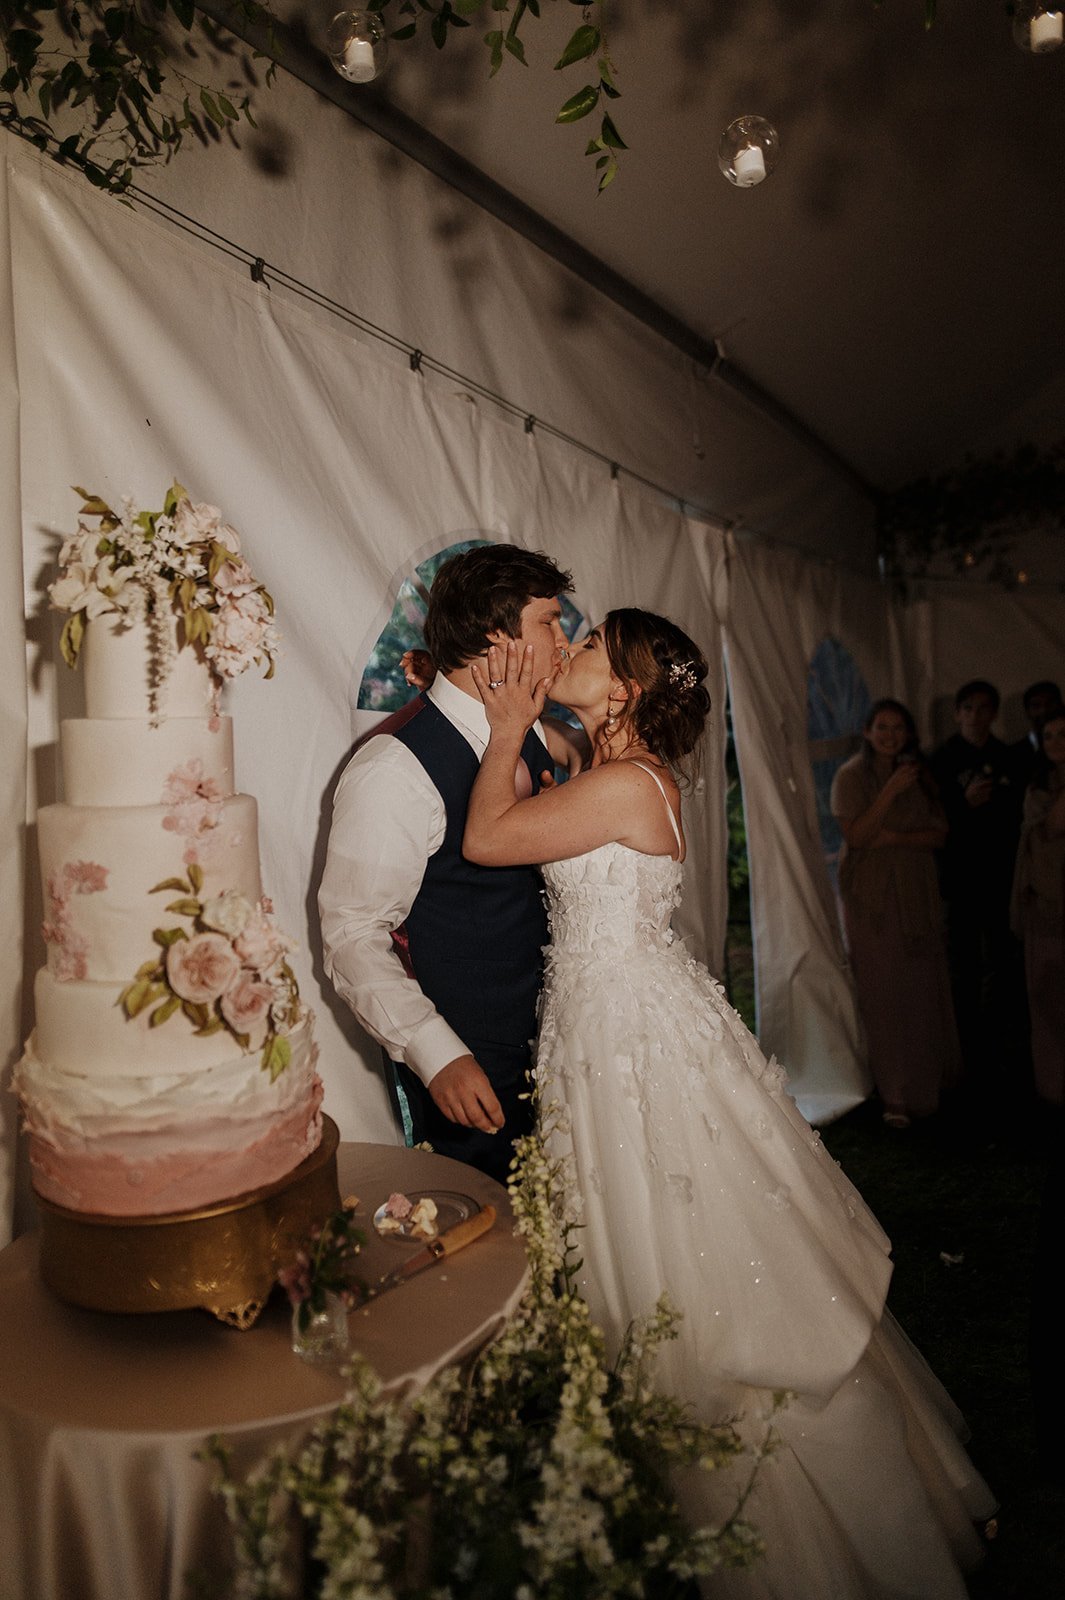 Unforgettable Moments with Luxury Wedding Details | Alaska Wedding Photographer